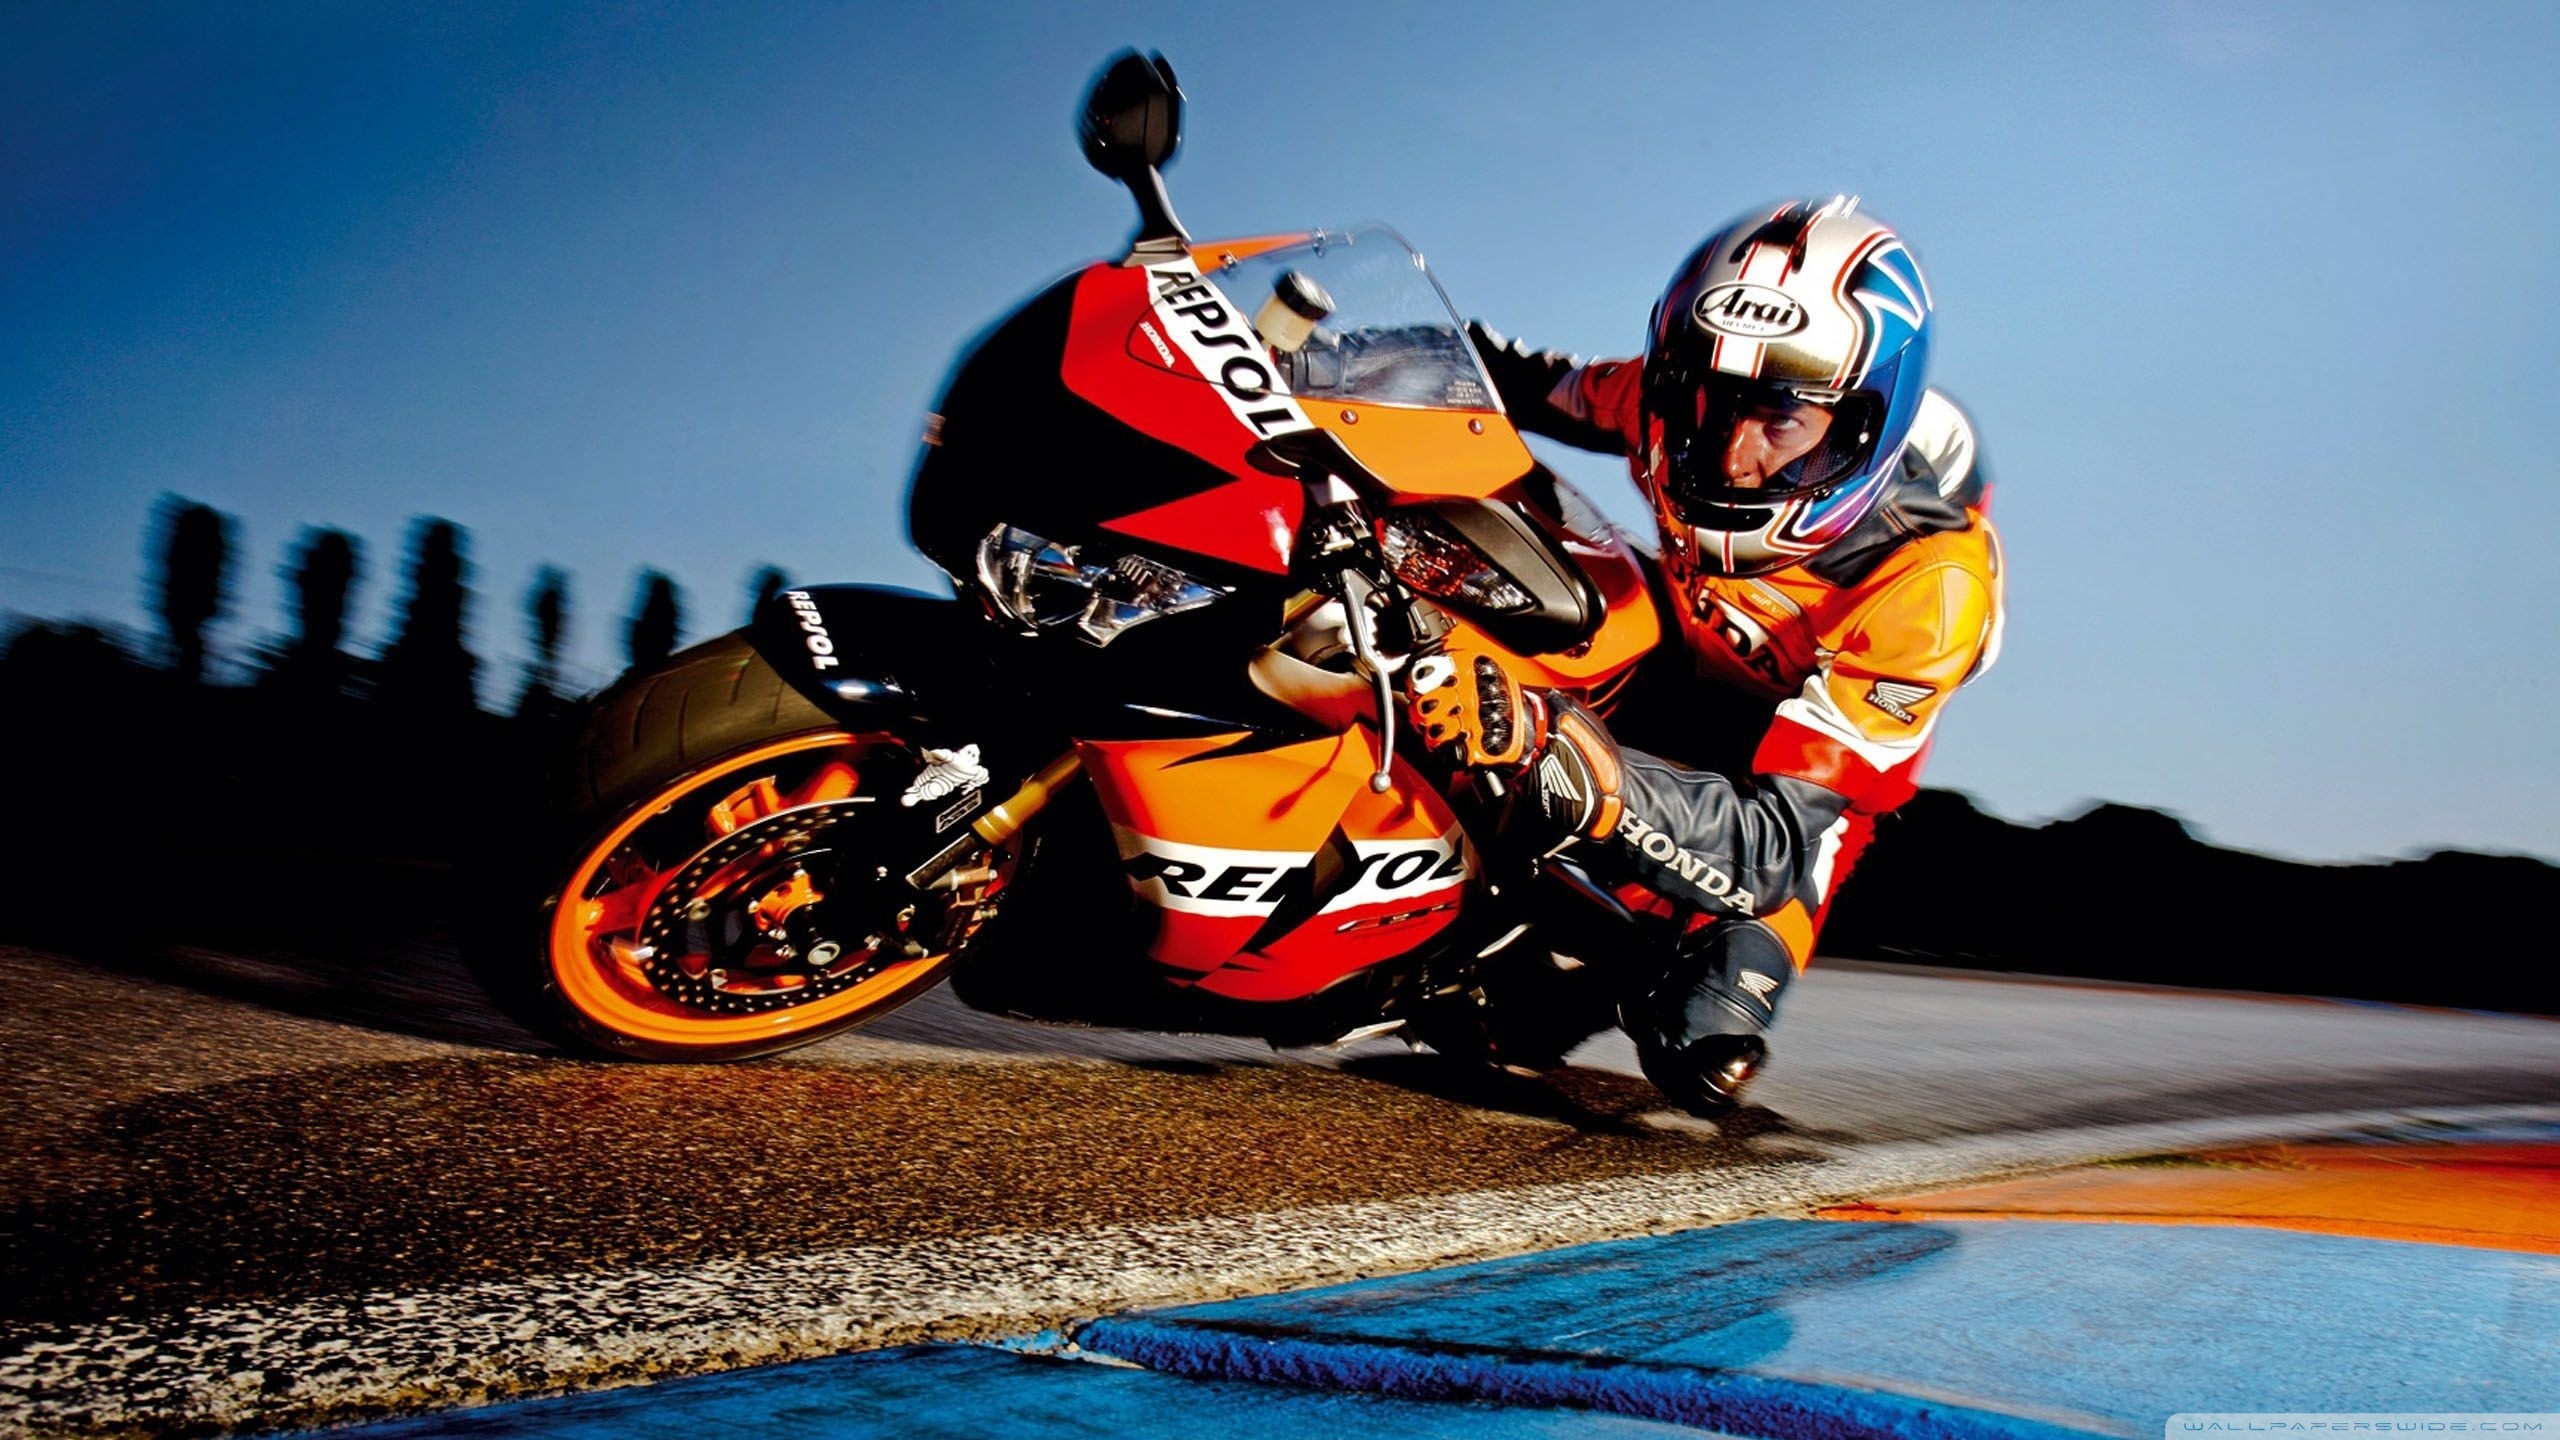 motorcycle wallpaper,motorcycle racer,motorcycle,motorcycling,superbike racing,road racing